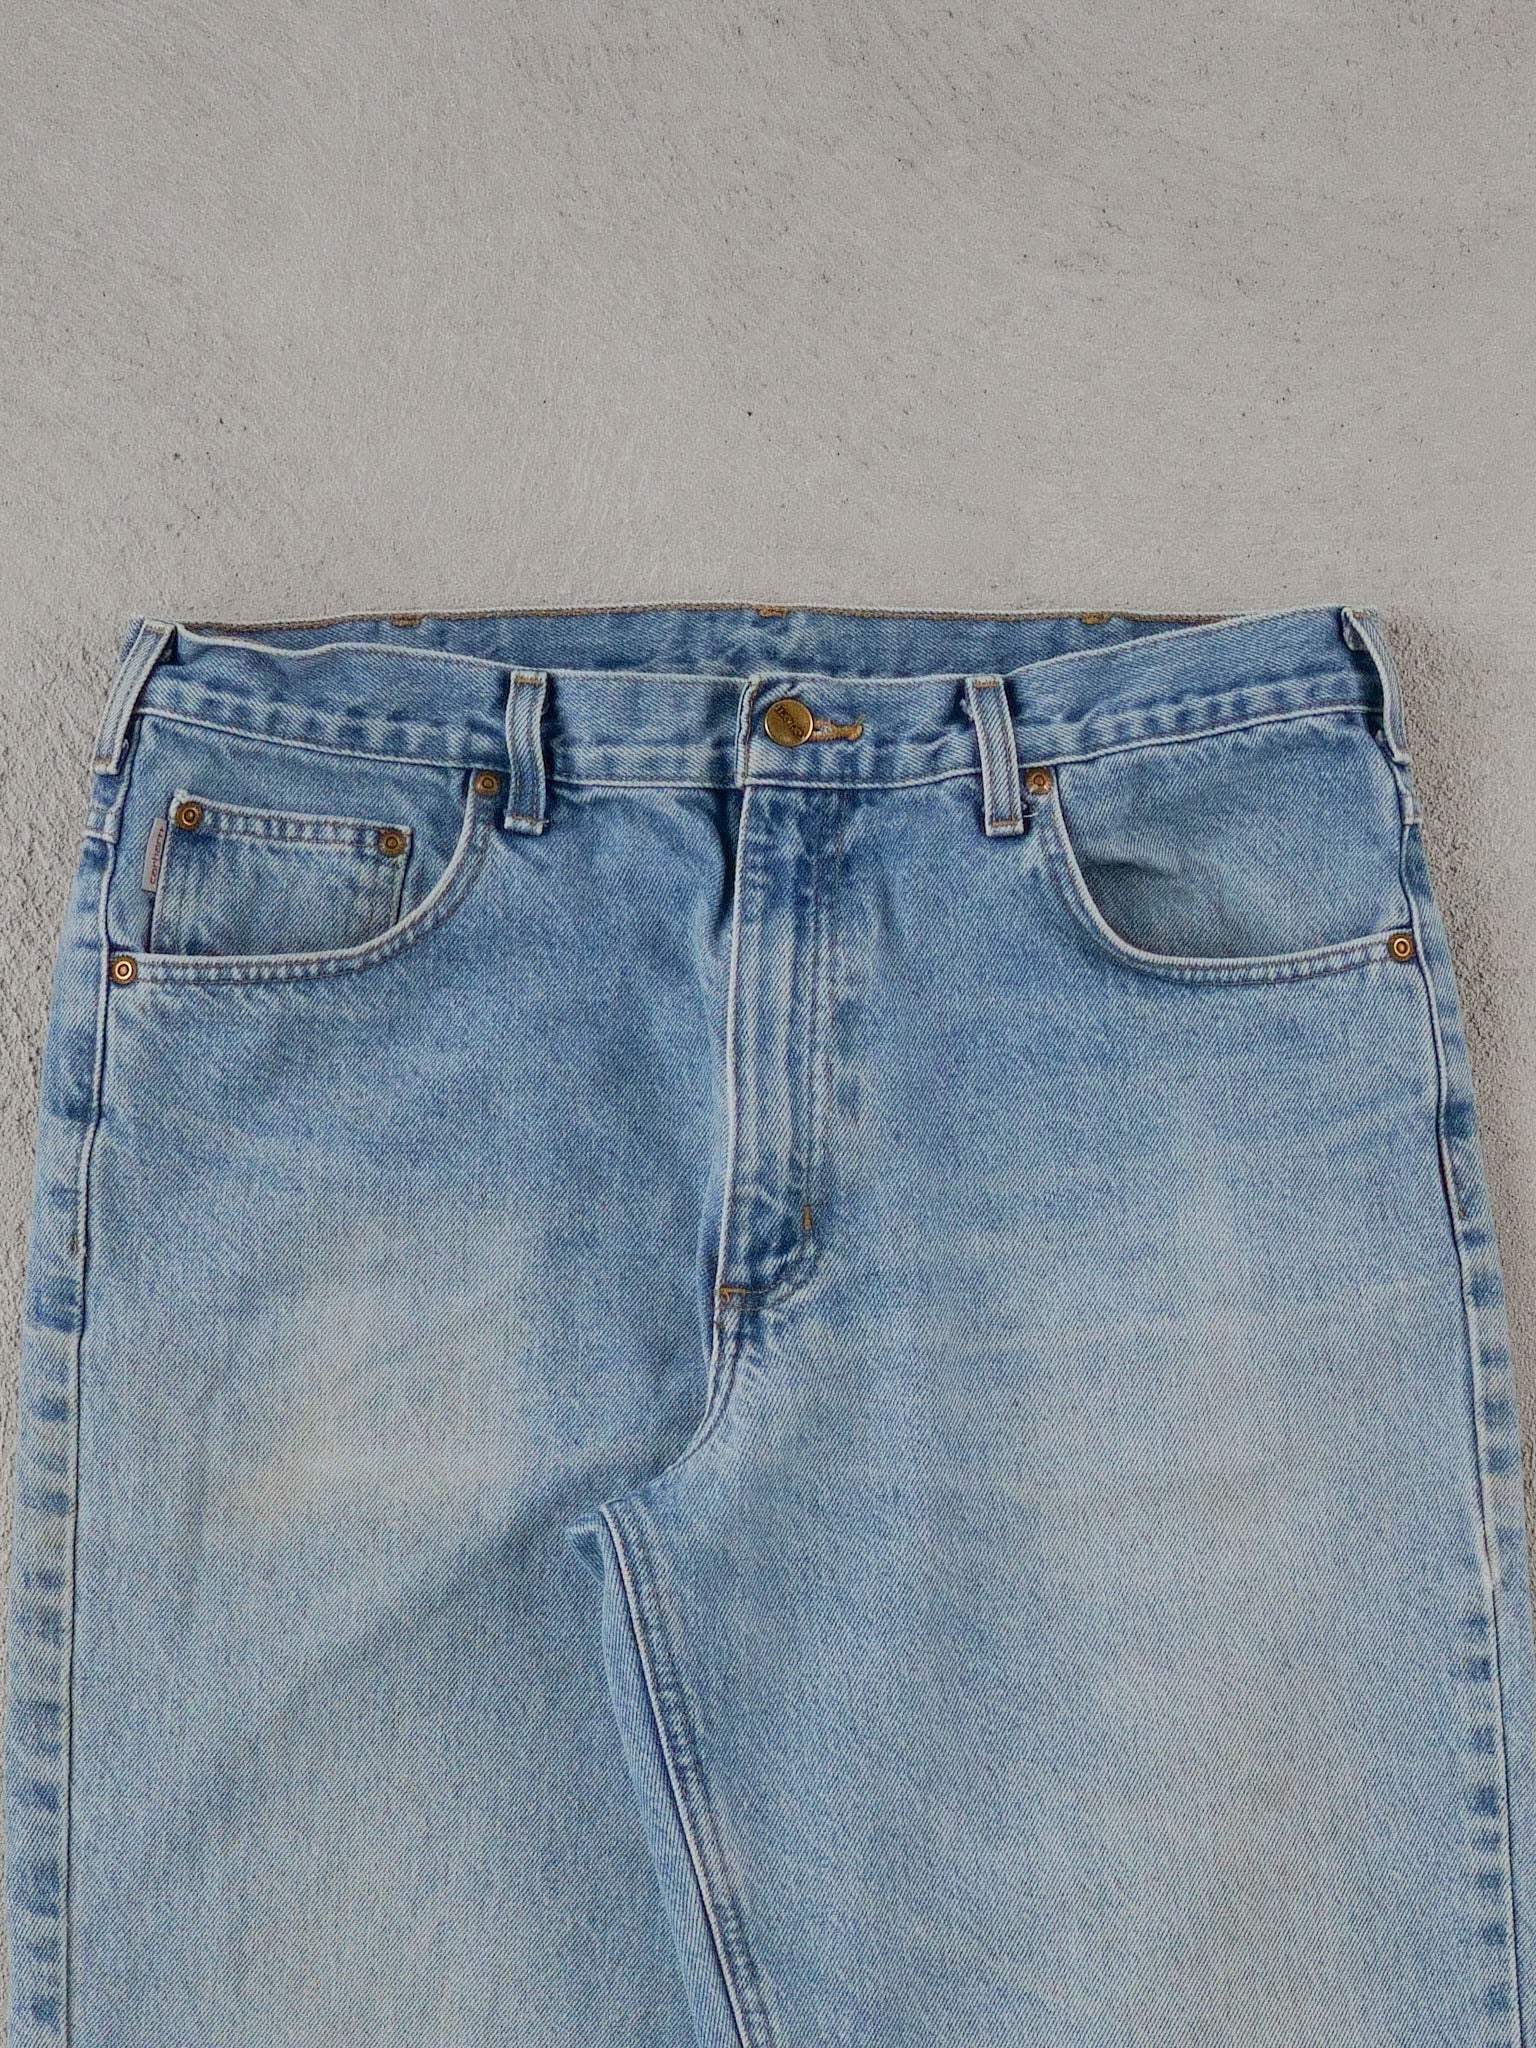 Vintage 90s Light Blue Carhartt Denim Jeans (36x32)